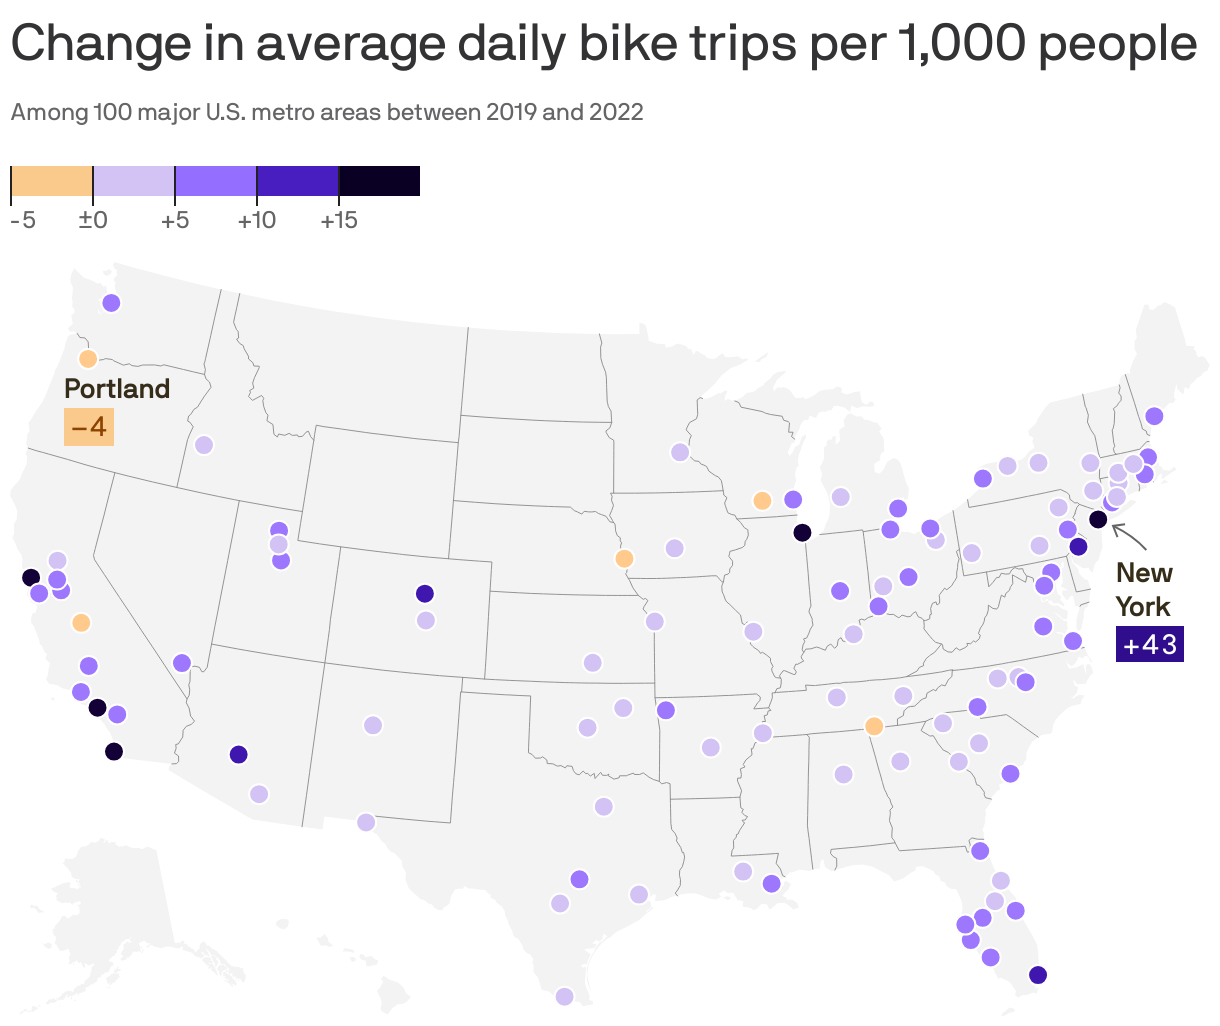 Change in average daily bike trips